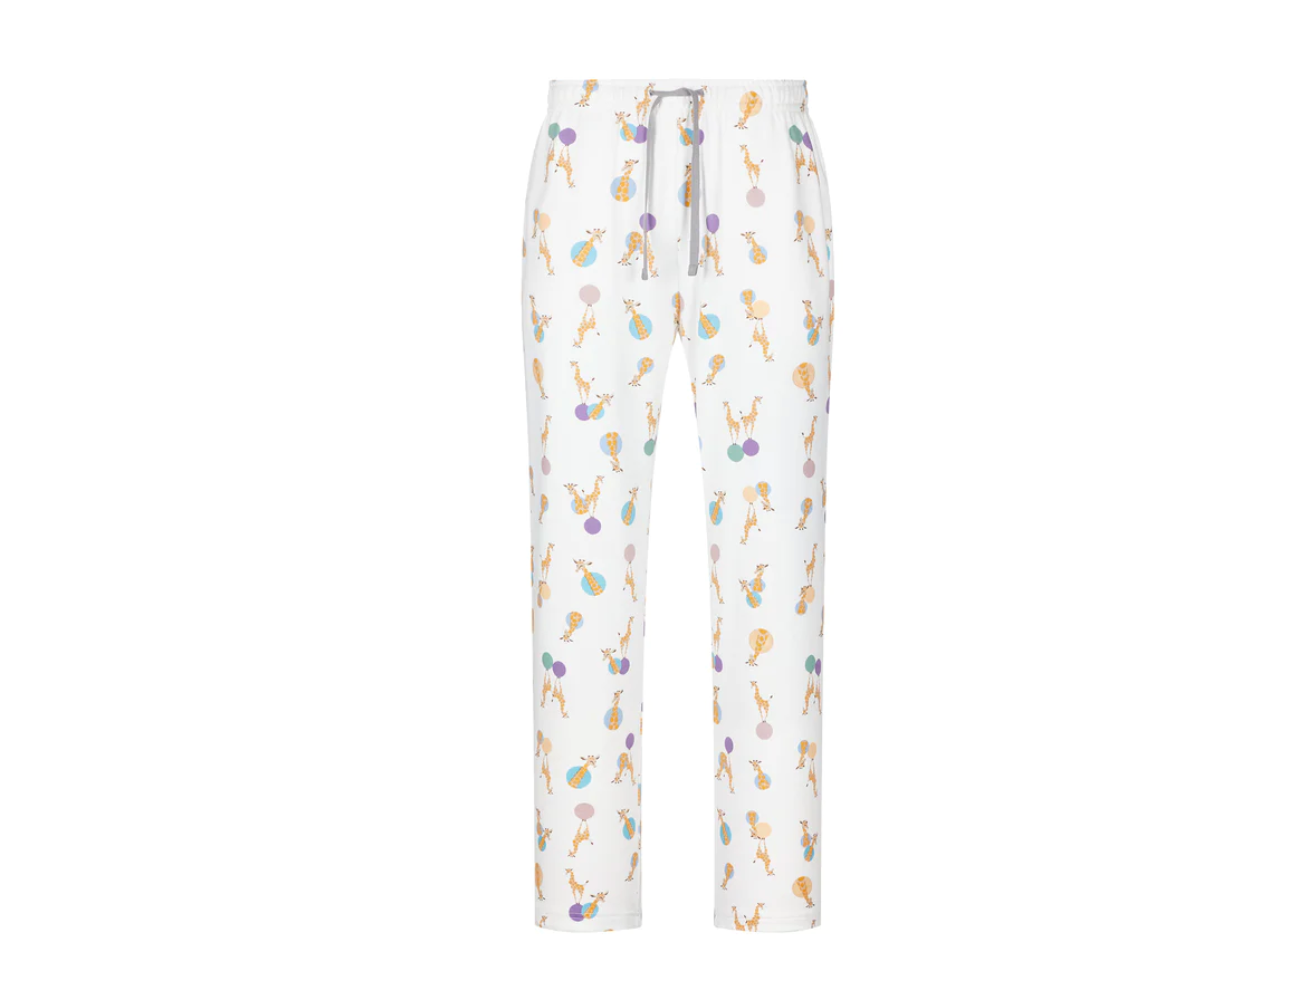 Women's Long Sleeve Pocket Tee PJ Set (Cotton) - Giraffe Shapes